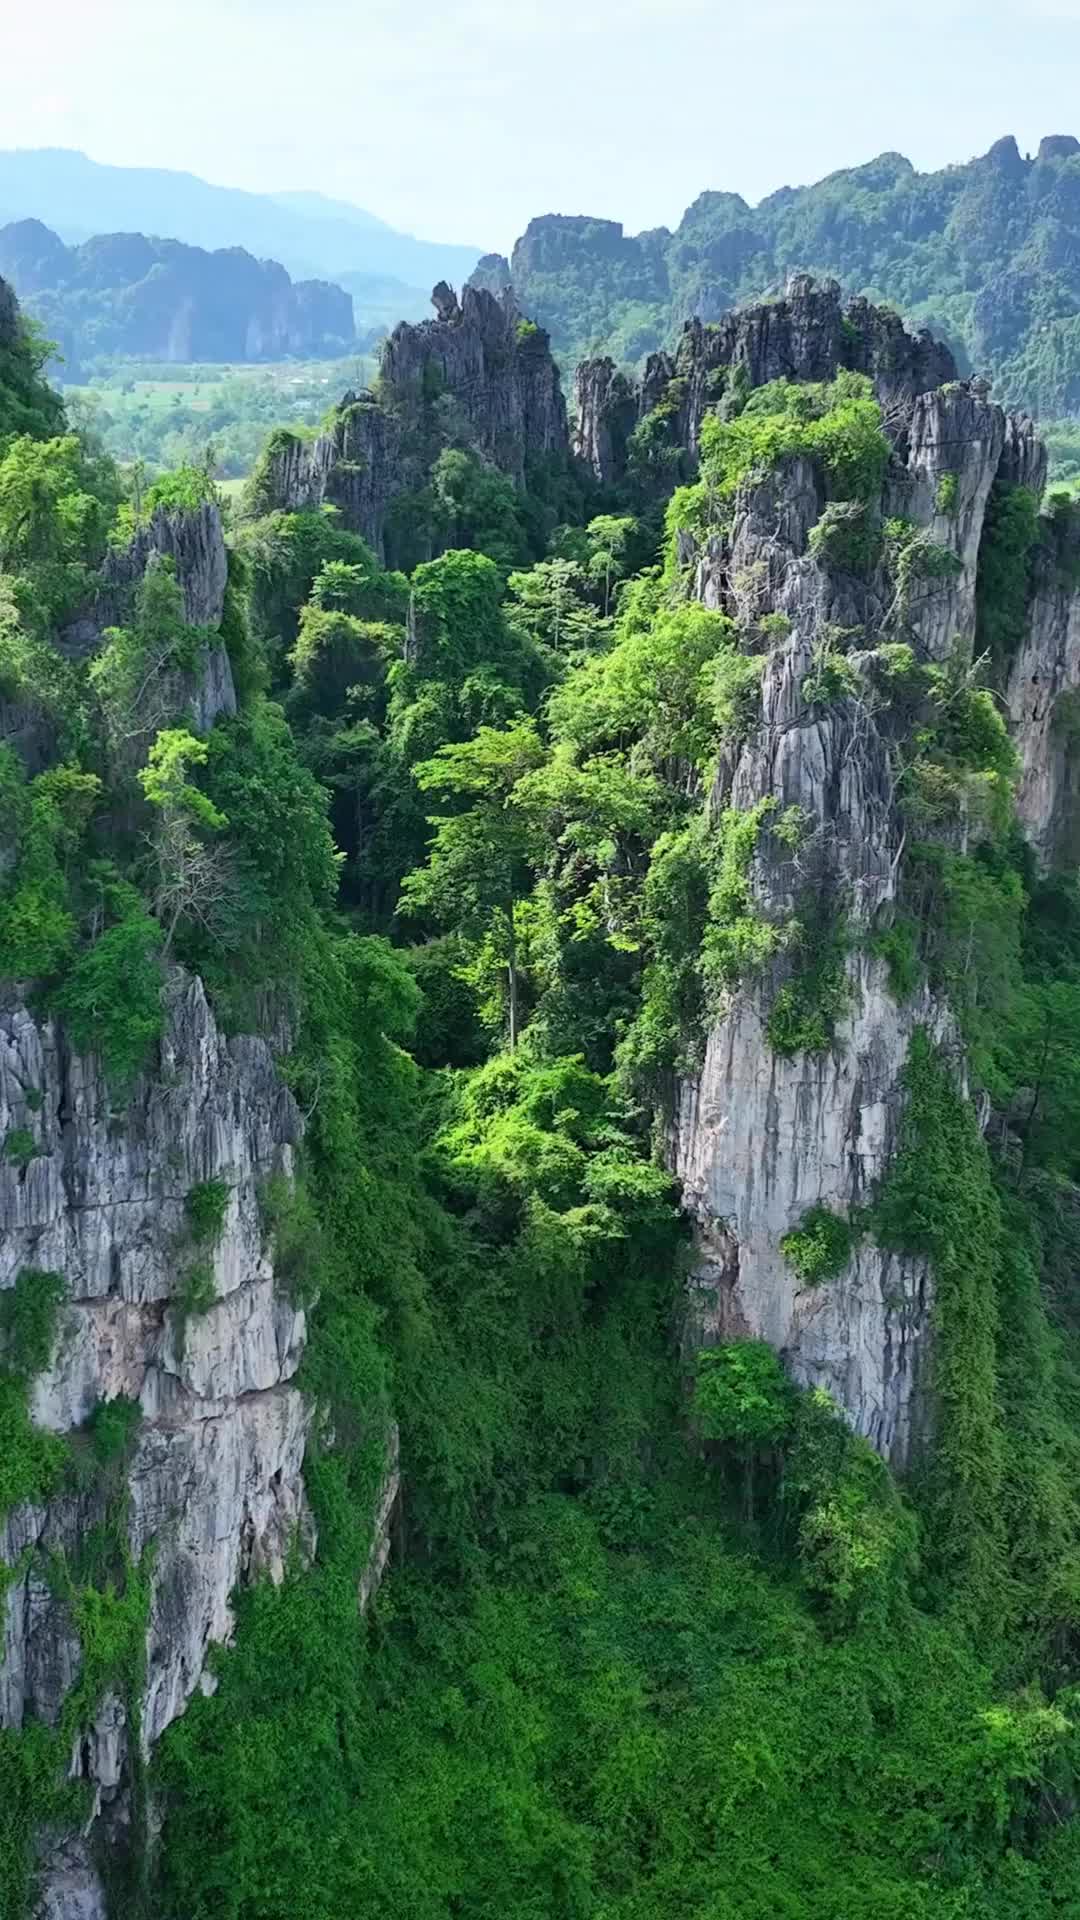 Dream landscapes in central Thailand. ⛰
📍 Phitsanulok

#aventura #outside #bosque #hiddengems #phitsanulok #طبیعت #explore #photoboom #ธรรมชาติ #explore #landschaft #verde #dronephotography #paisaje #travel